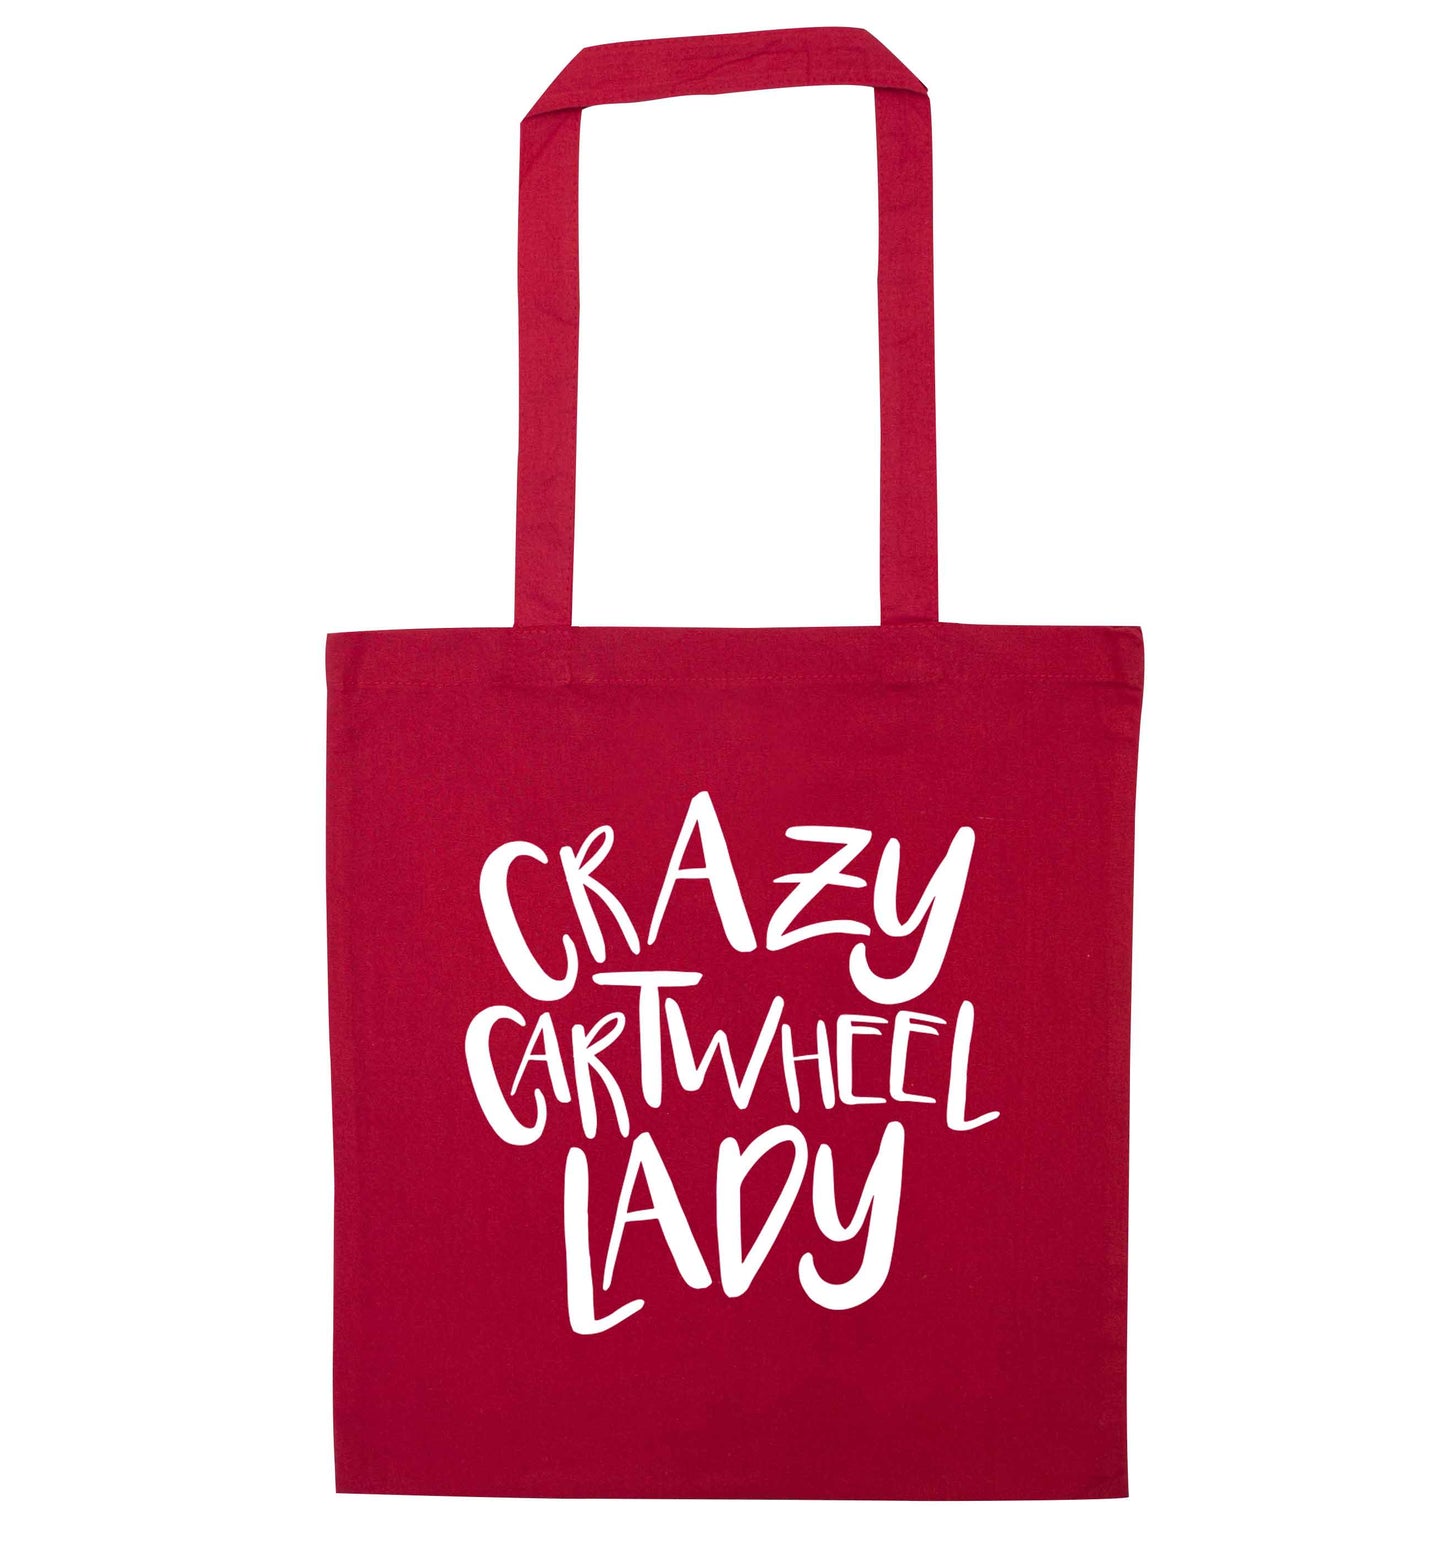 Crazy cartwheel lady red tote bag